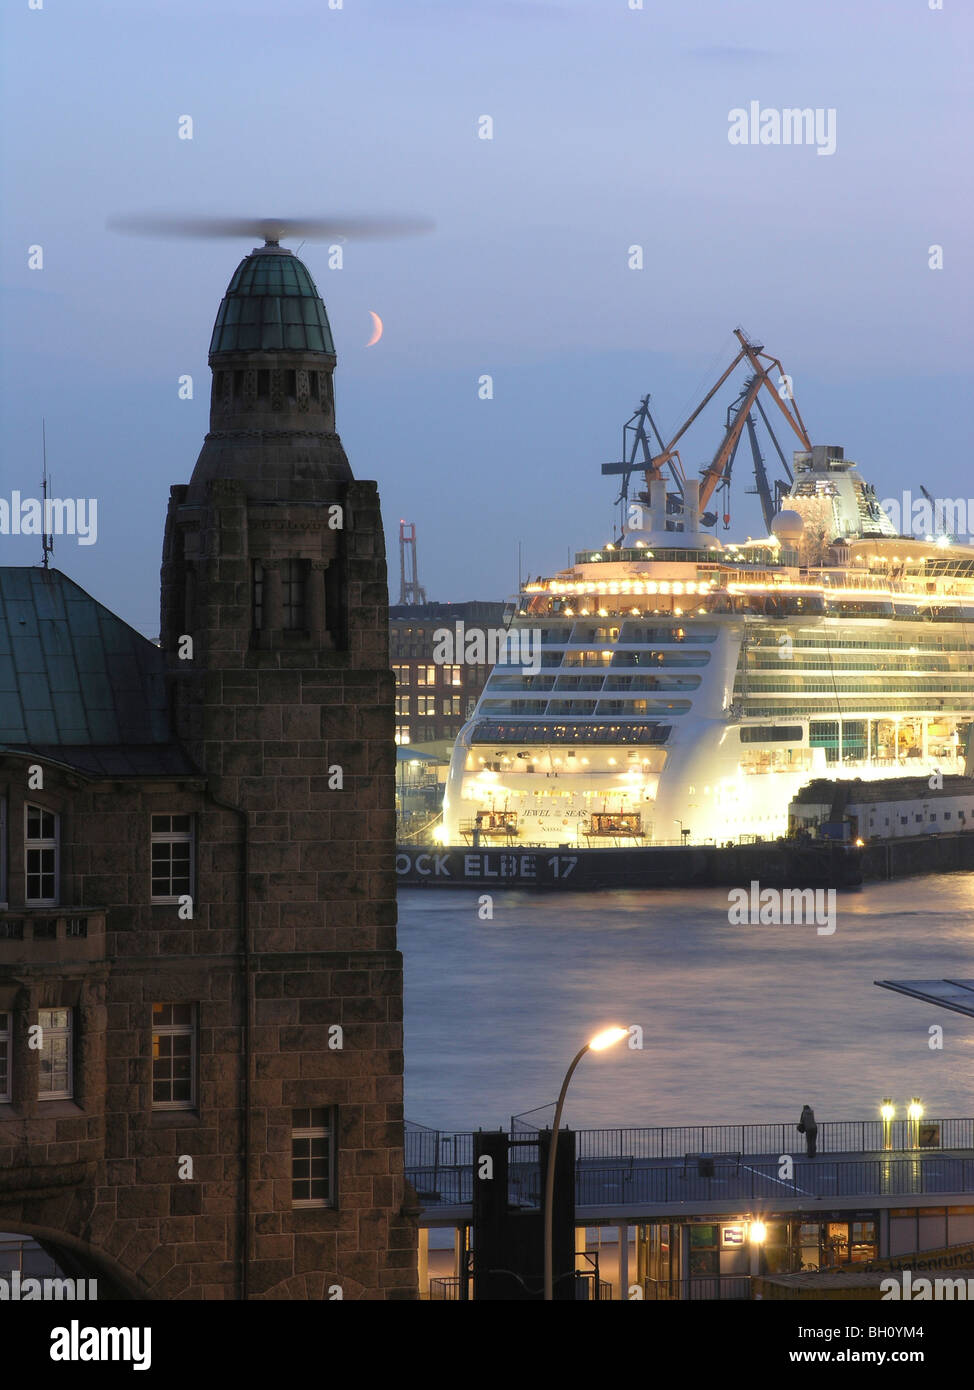 Cruise Ship Jewel of the Seas in the shipyard, Hanseatic City of Hamburg, Germany Stock Photo